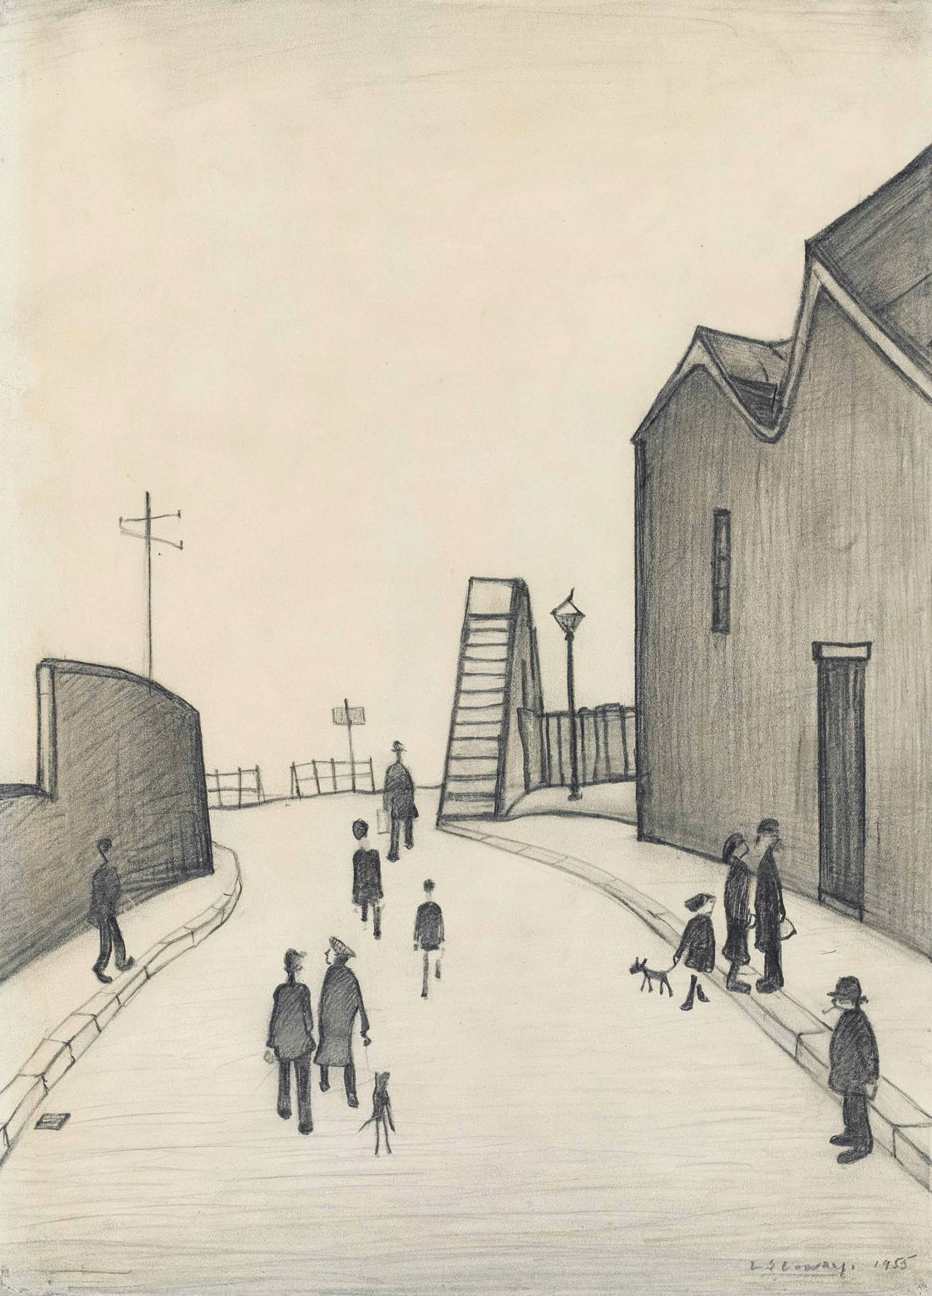 Footbridge at Droylsden (1955) by Laurence Stephen Lowry (1887 - 1976), English artist.